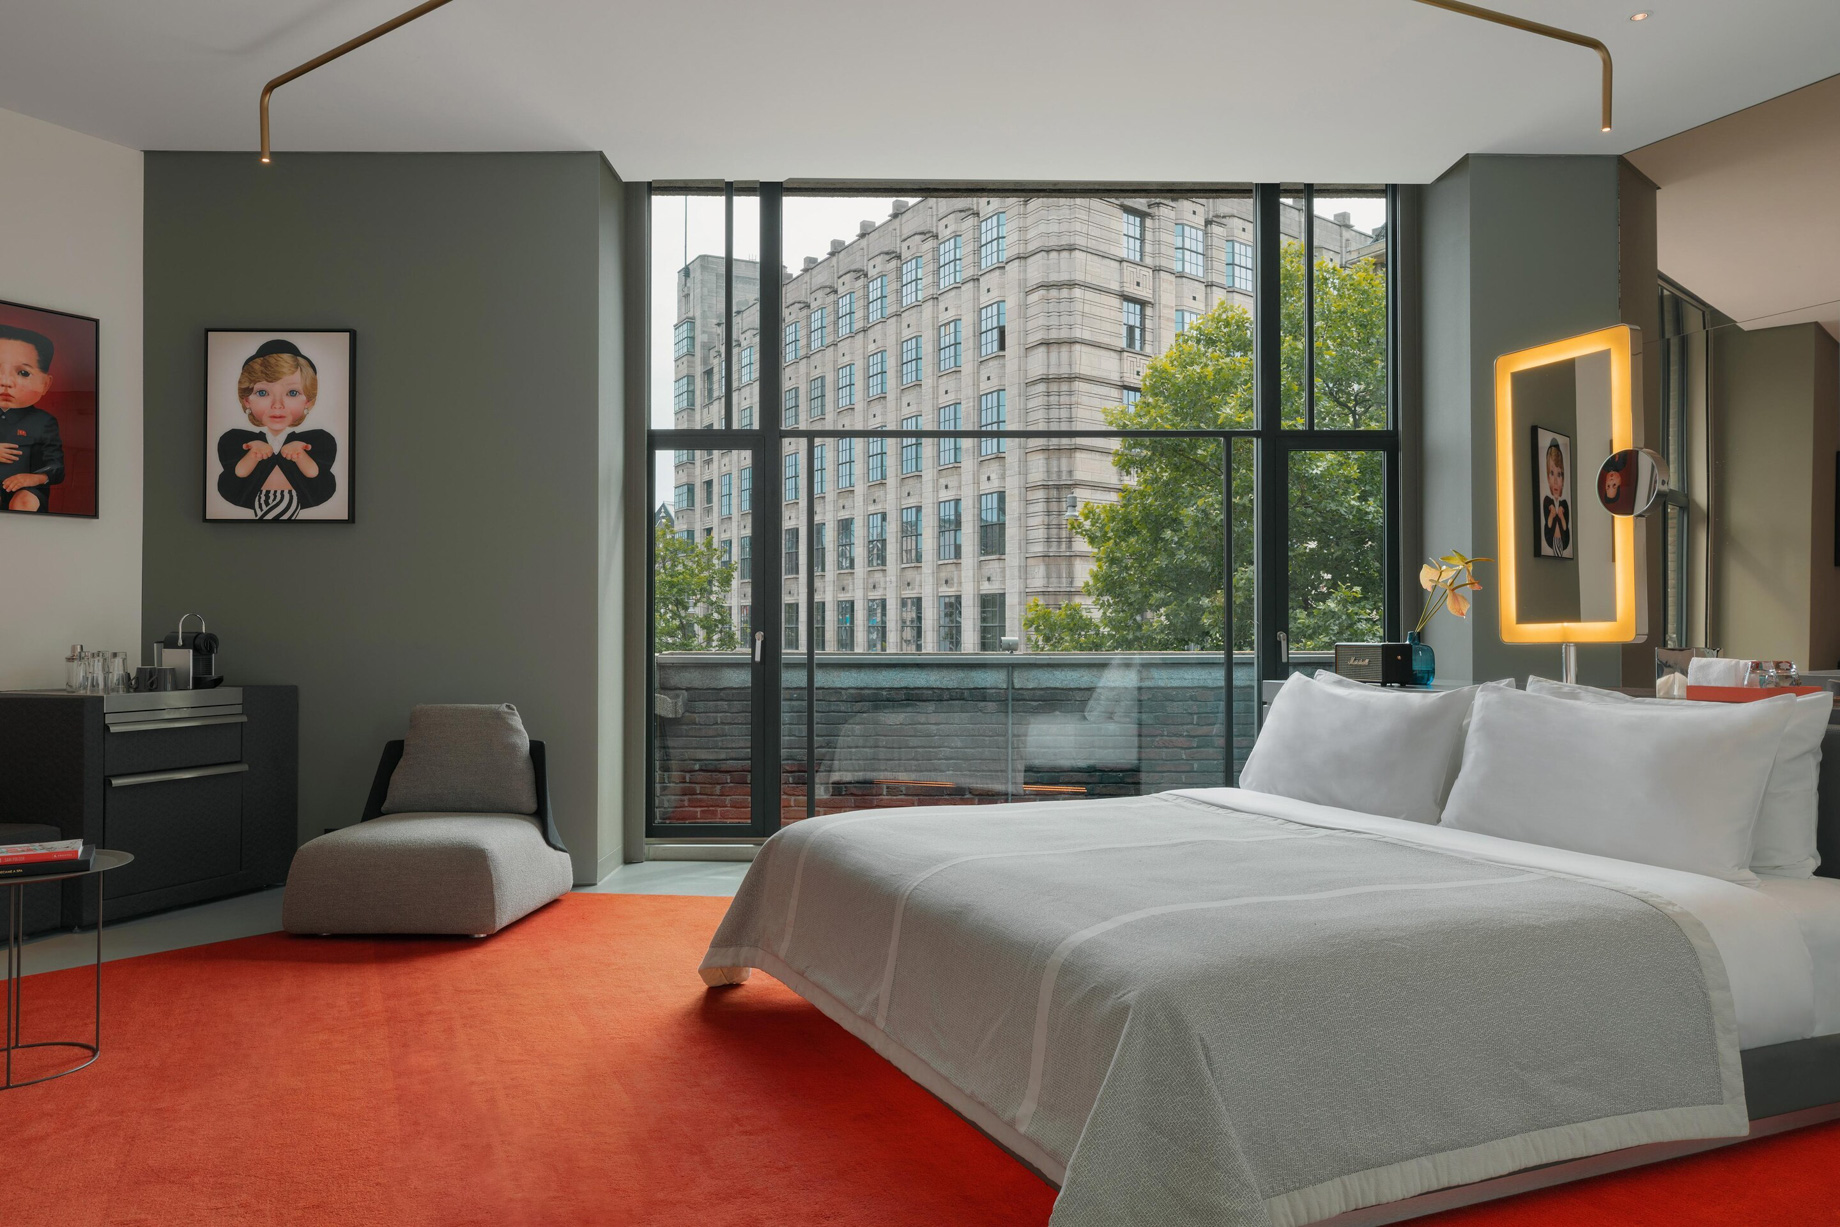 W Amsterdam Hotel – Amsterdam, Netherlands – Cool Corner Exchange Suite View